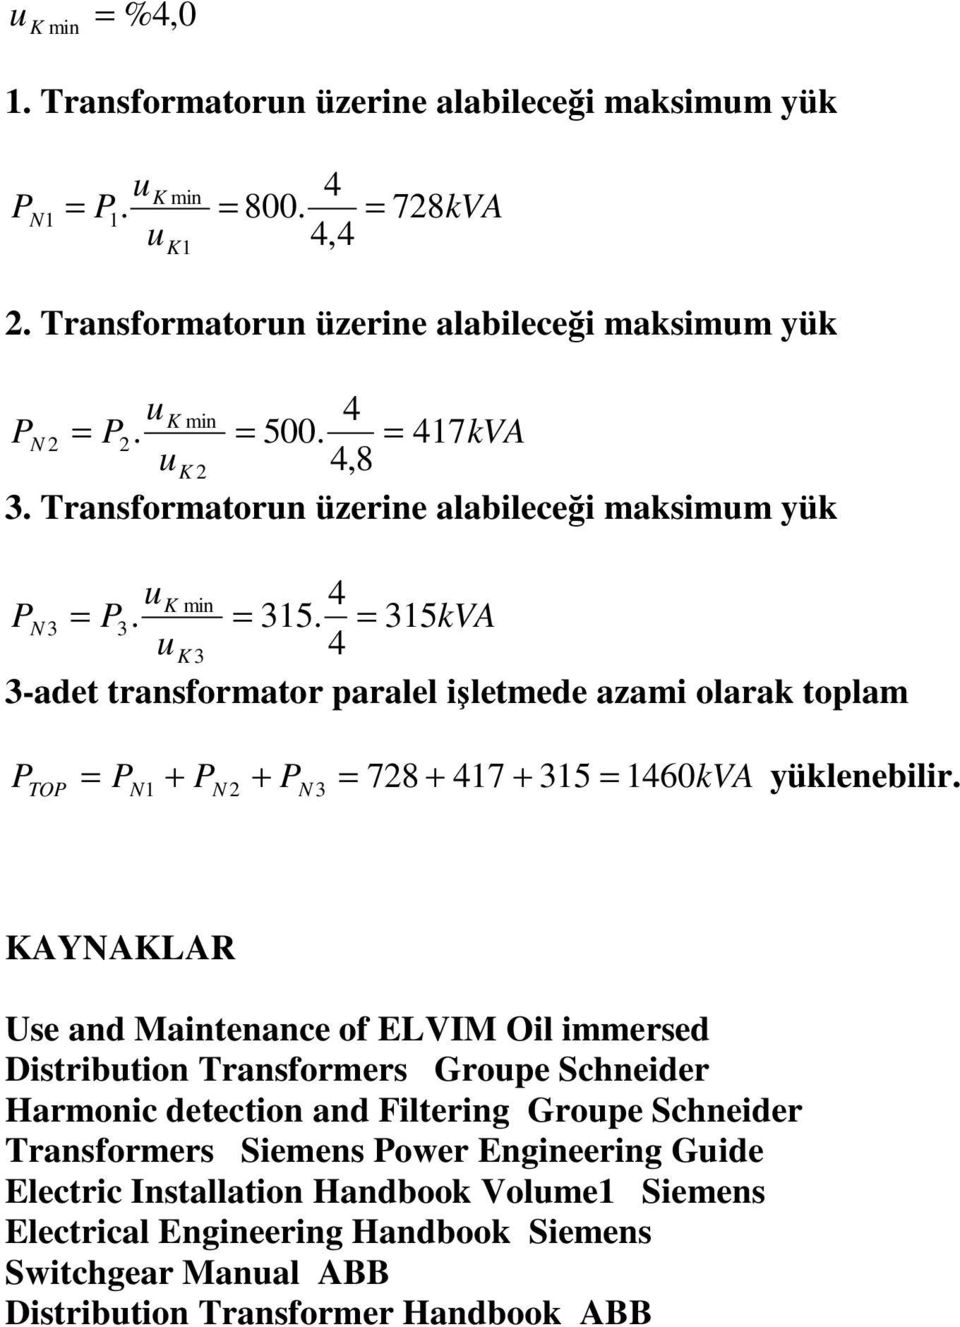 35 460kVA yüklenebili KAYNAKLAR se and Maintenance of ELVM Oil immesed Distibtion Tansfomes Gope chneide Hamonic detection and Filteing Gope chneide